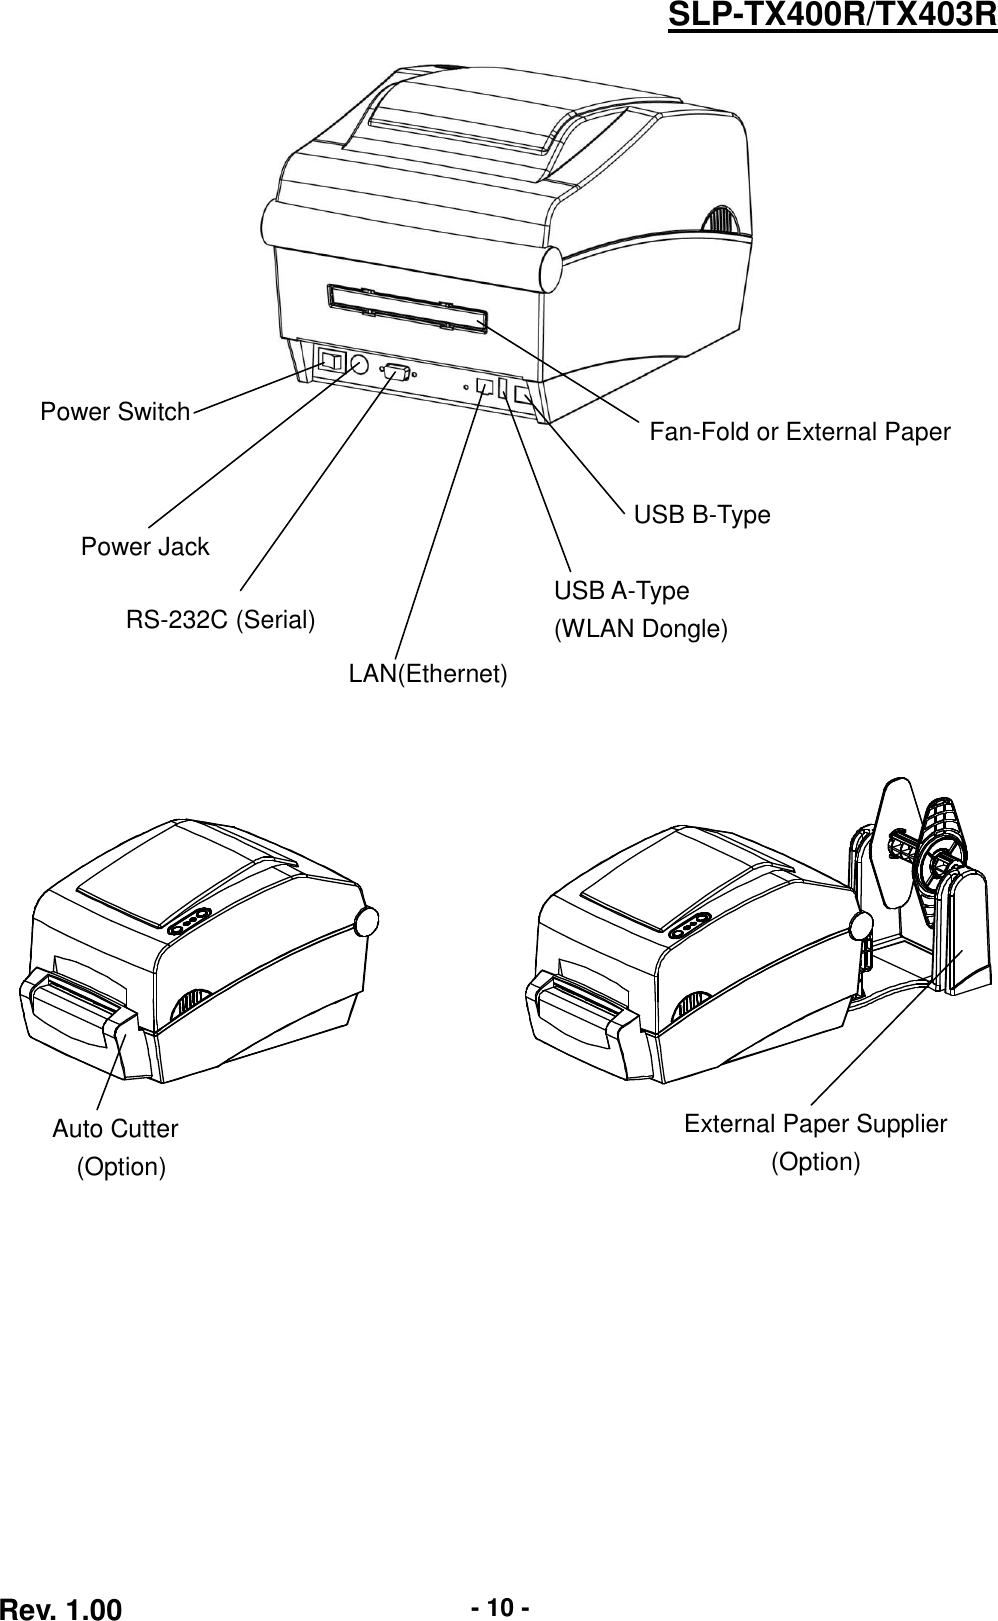  Rev. 1.00 - 10 - SLP-TX400R/TX403R                                                       Power Switch USB A-Type (WLAN Dongle)  USB B-Type    Fan-Fold or External Paper  Power Jack RS-232C (Serial) Auto Cutter   (Option) External Paper Supplier (Option) LAN(Ethernet)  